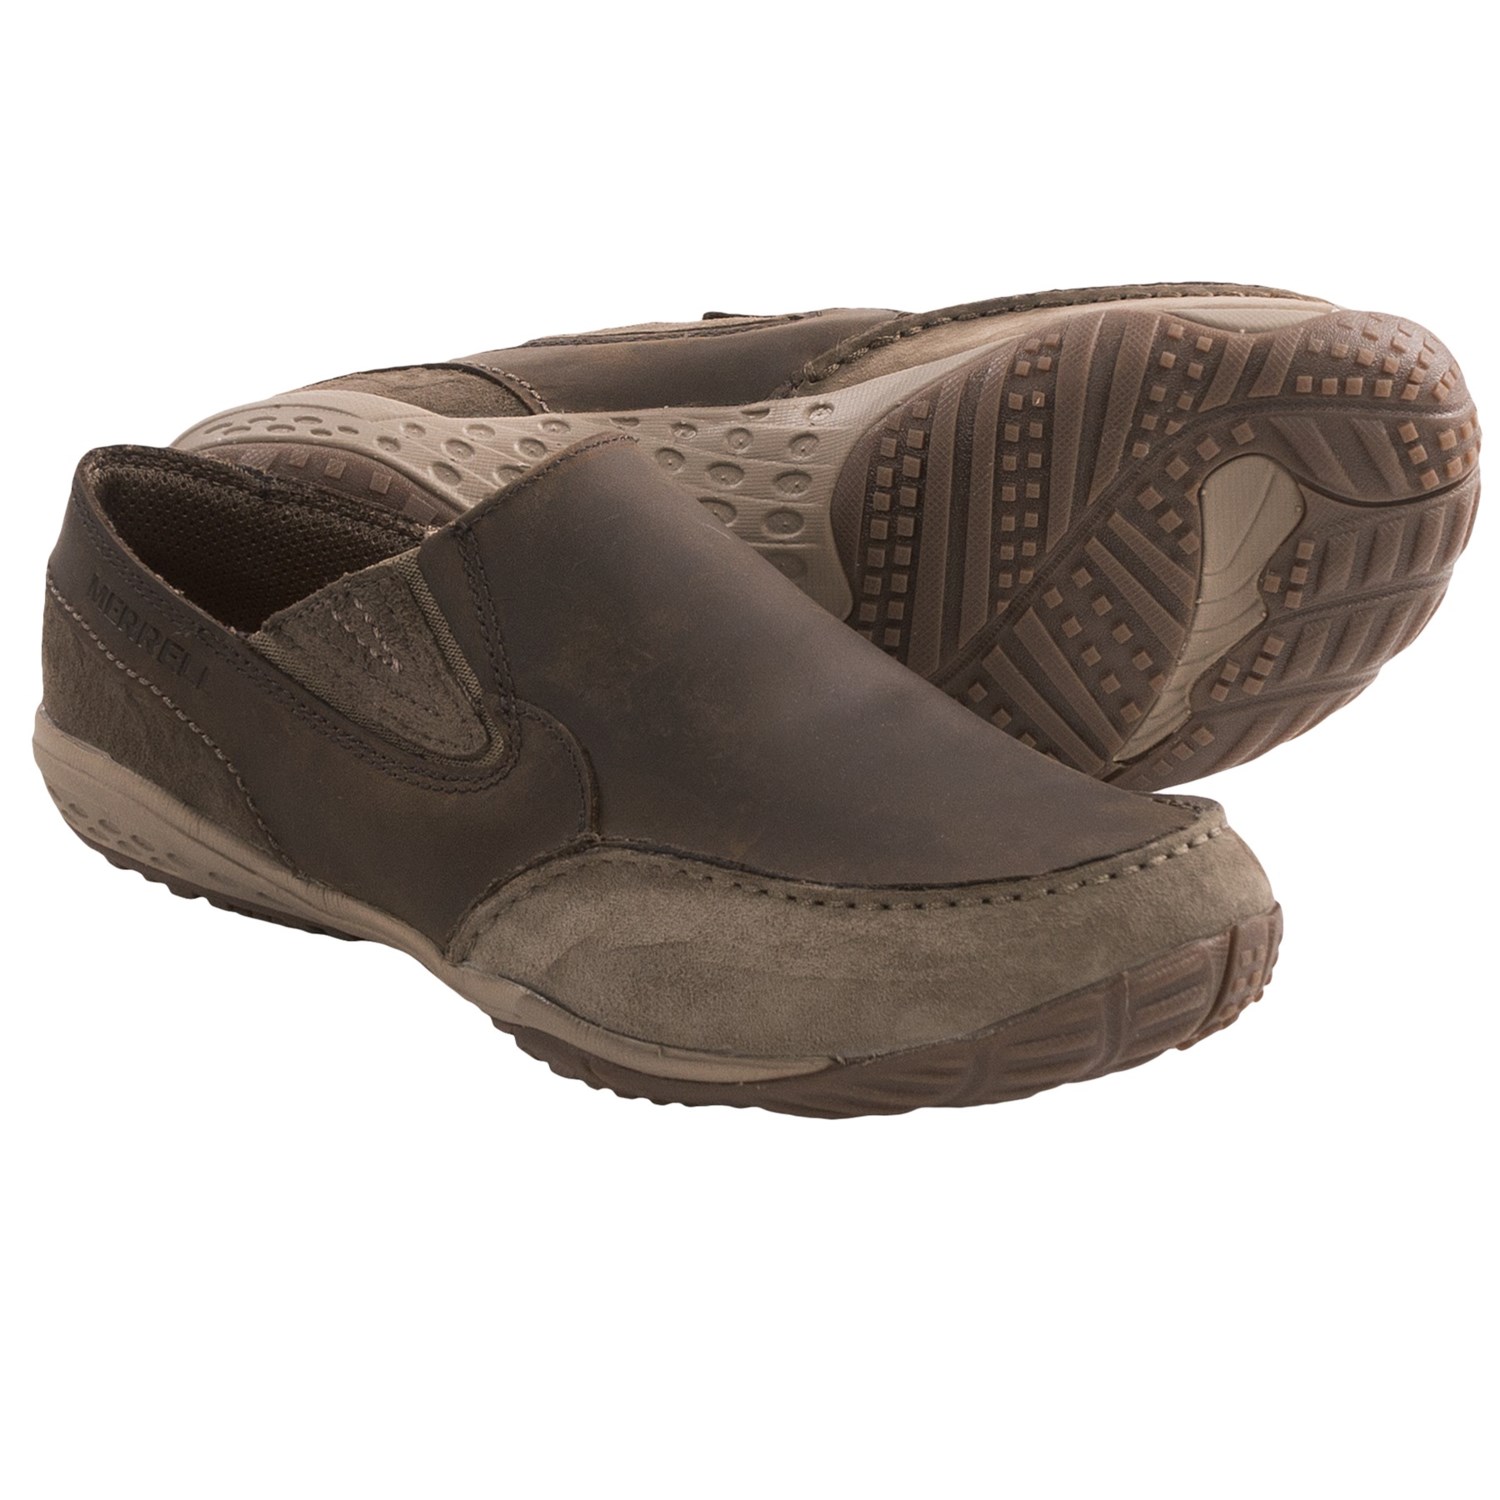 Merrell Barefoot Life Radius Glove Shoes - Minimalist, Leather, Slip ...